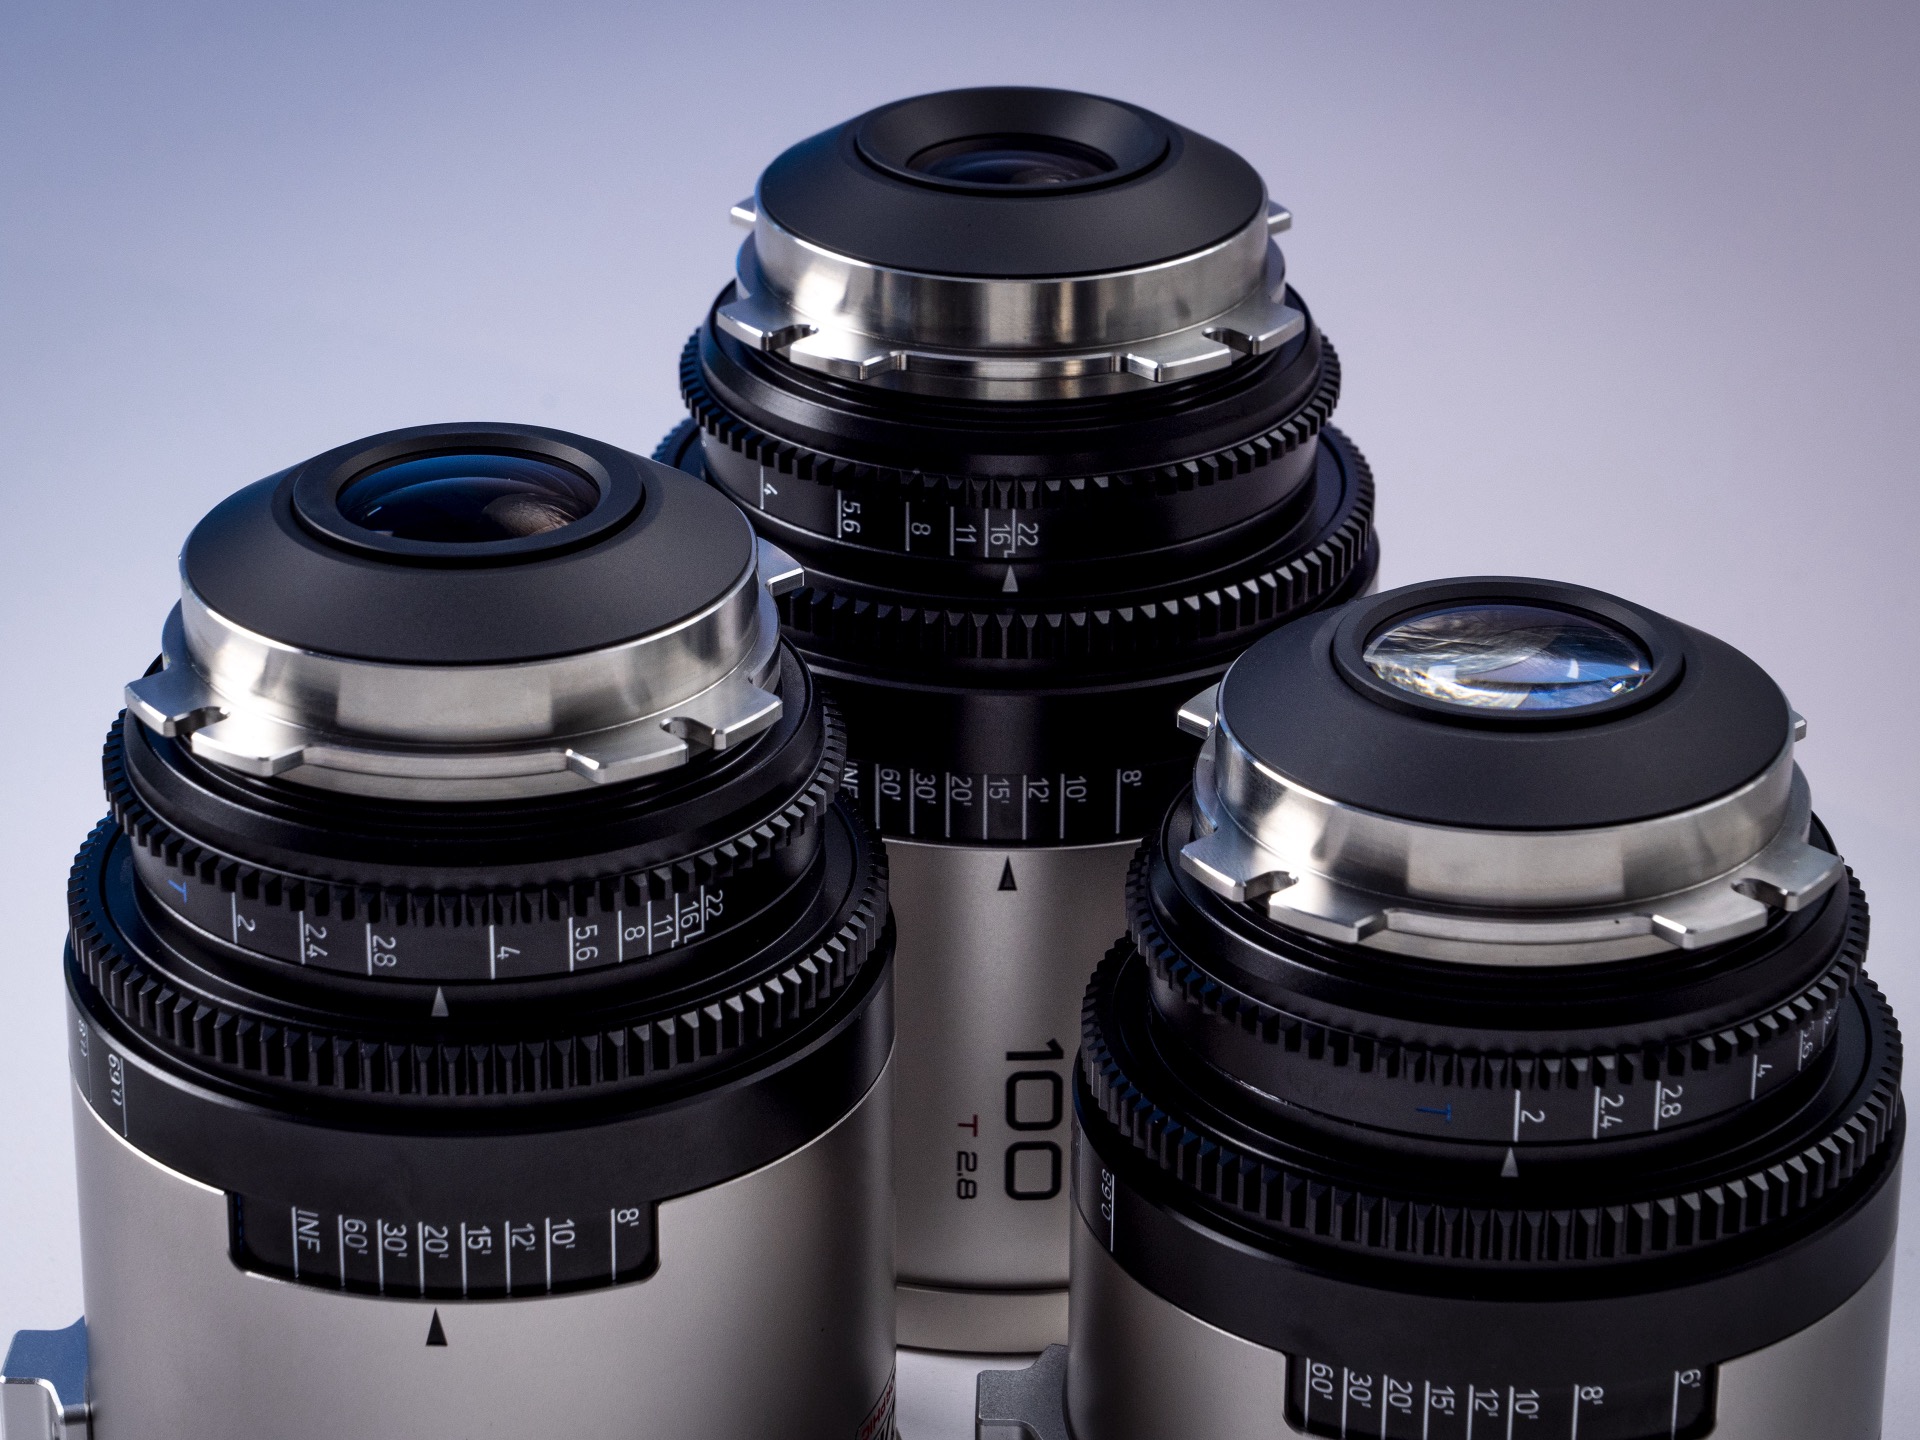 Review: Blazar Remus 1.5x anamorphic lenses 64